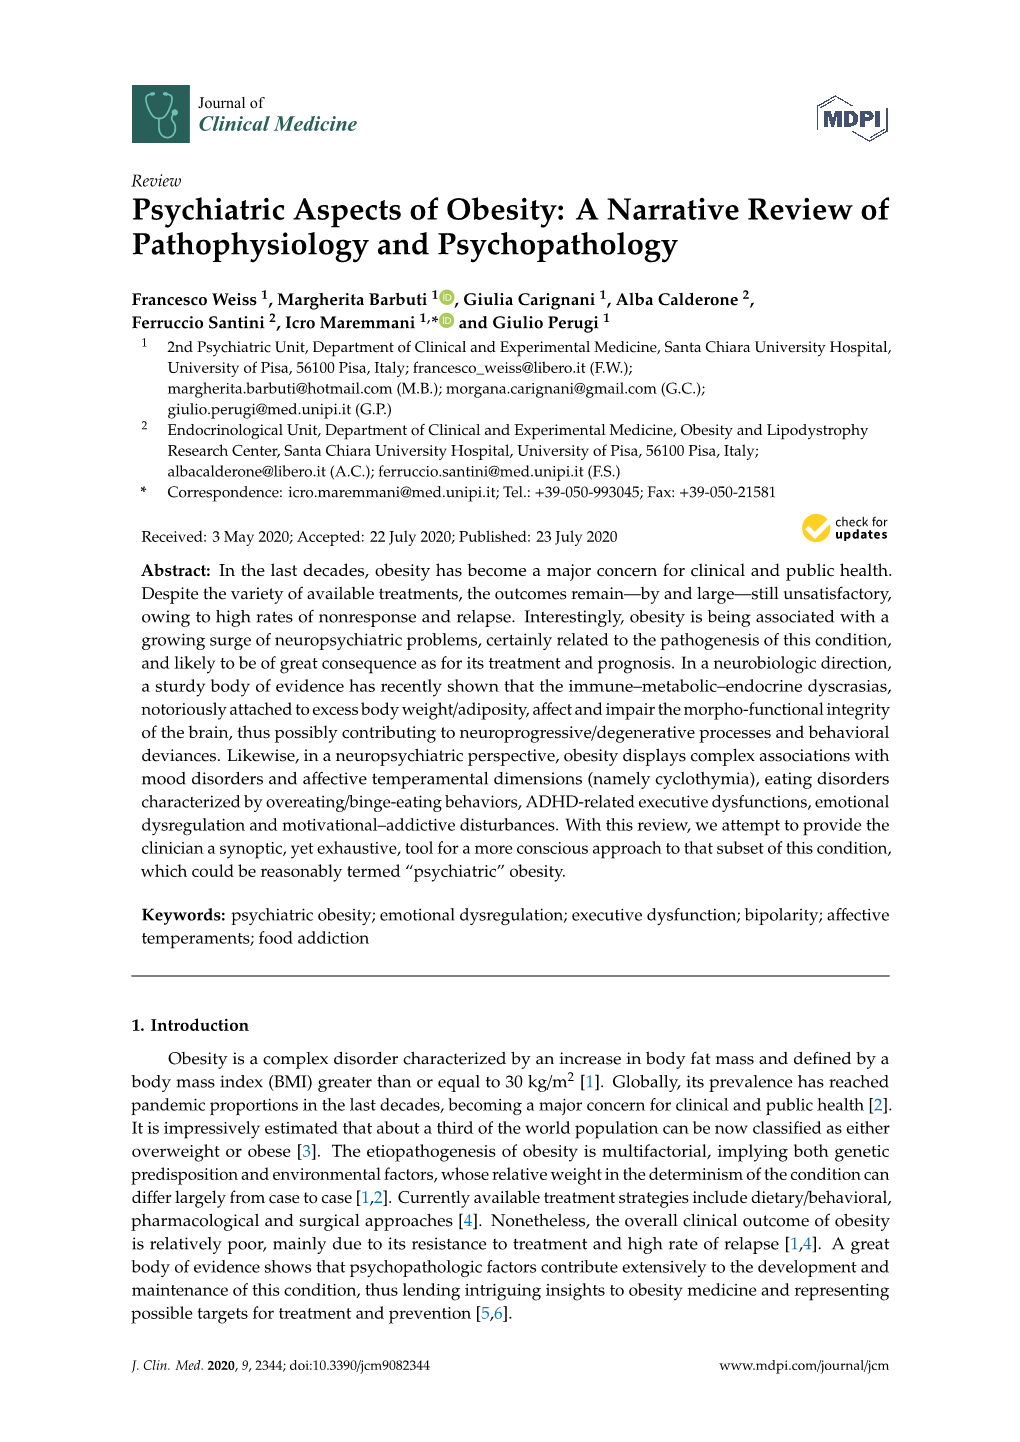 Psychiatric Aspects of Obesity: a Narrative Review of Pathophysiology and Psychopathology